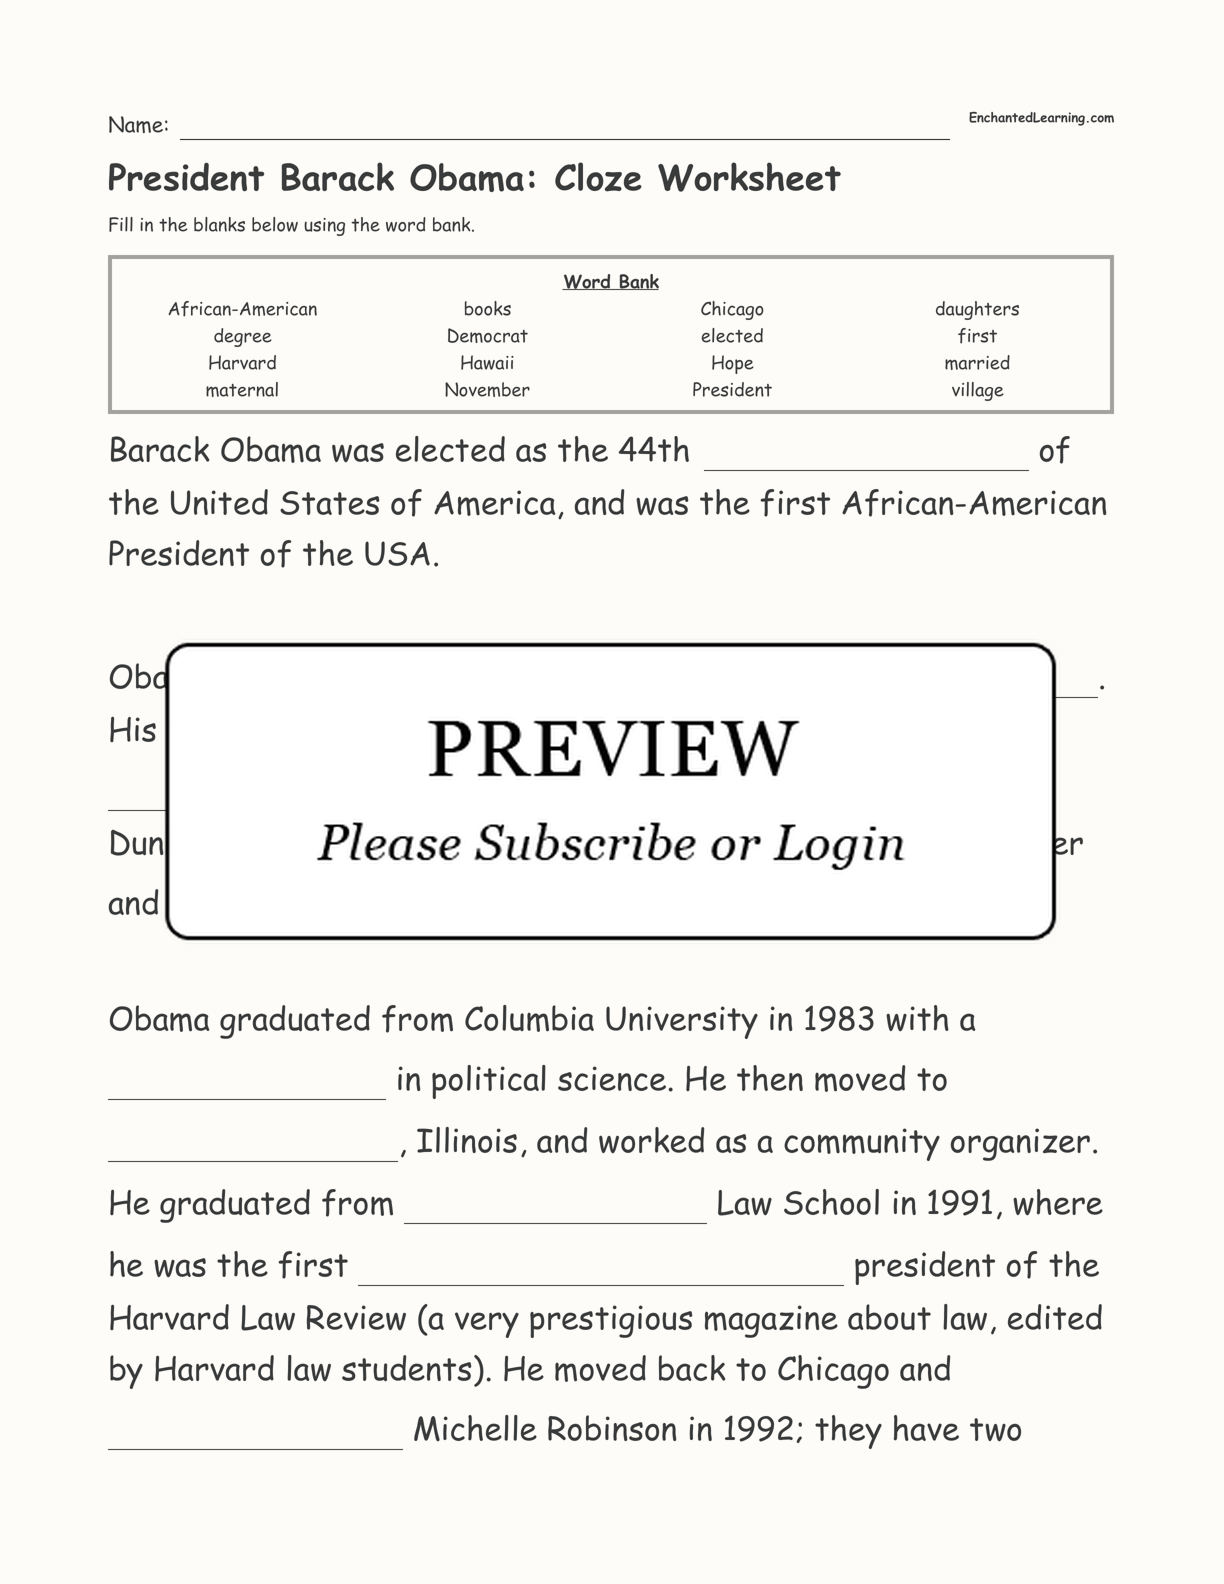 President Barack Obama: Cloze Worksheet interactive worksheet page 1